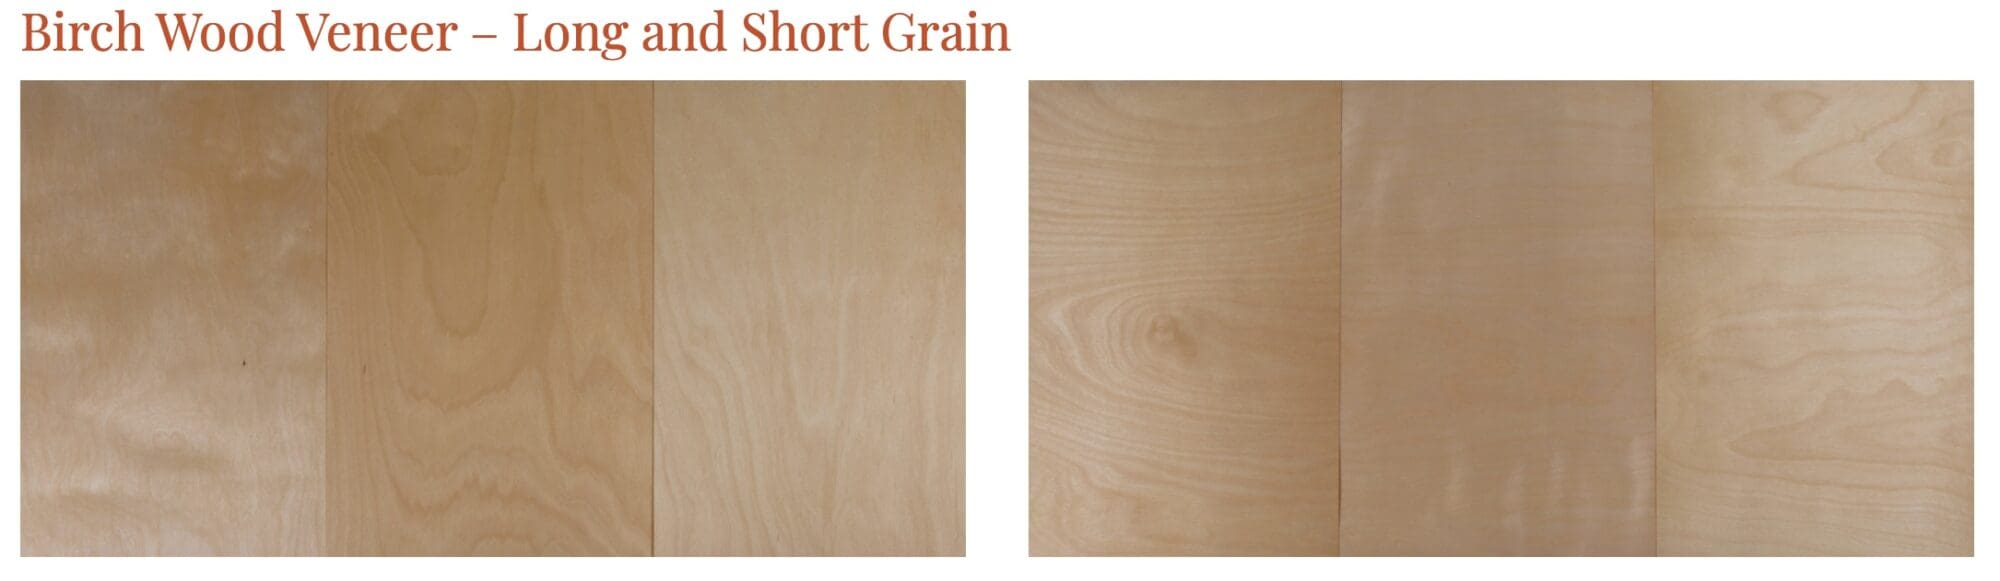 Birch Wood Veneer Long and Short Grain